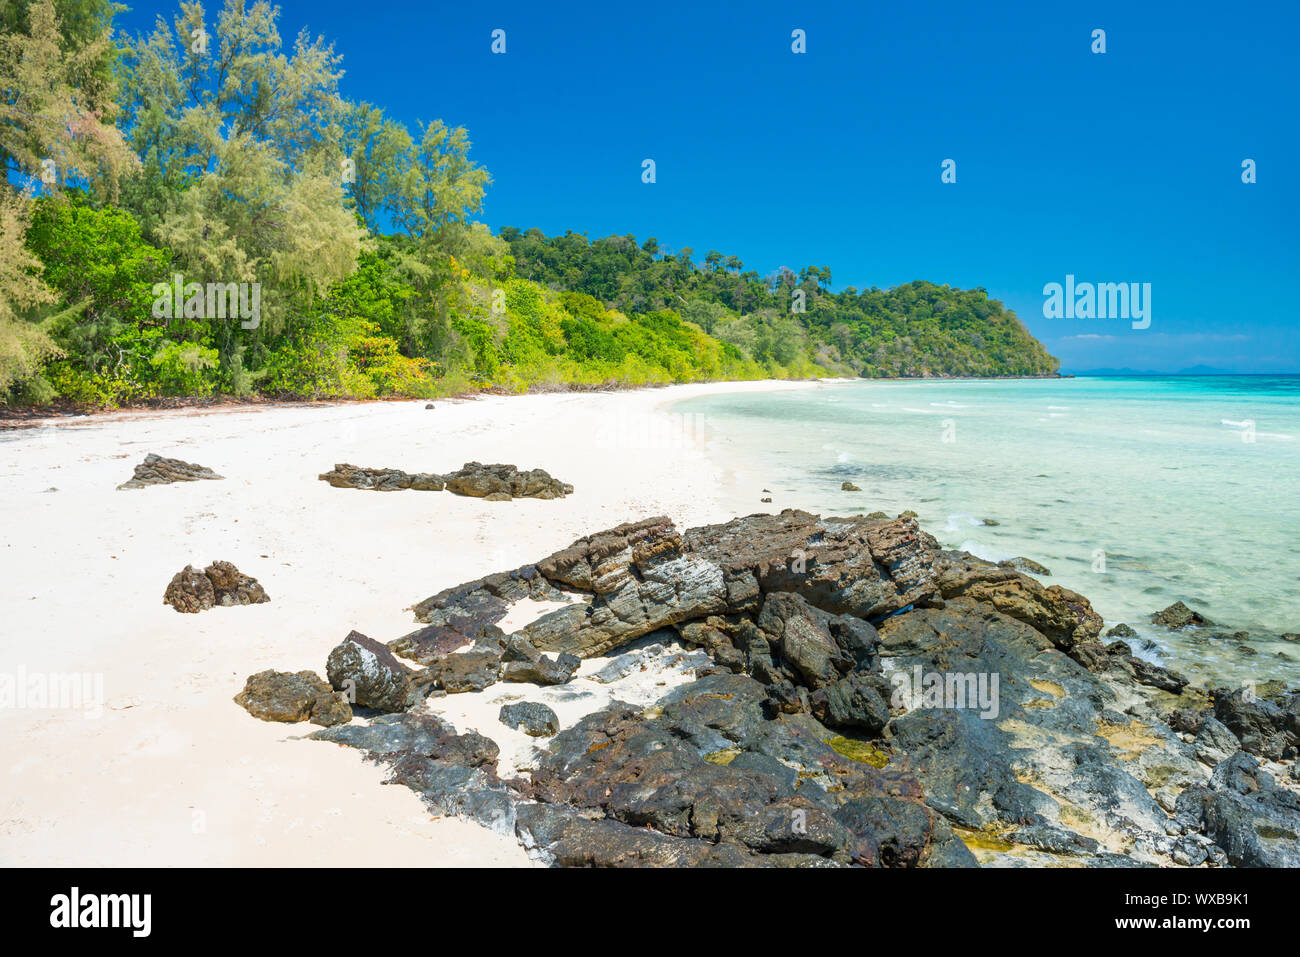 White sand beach at tropical island Stock Photo